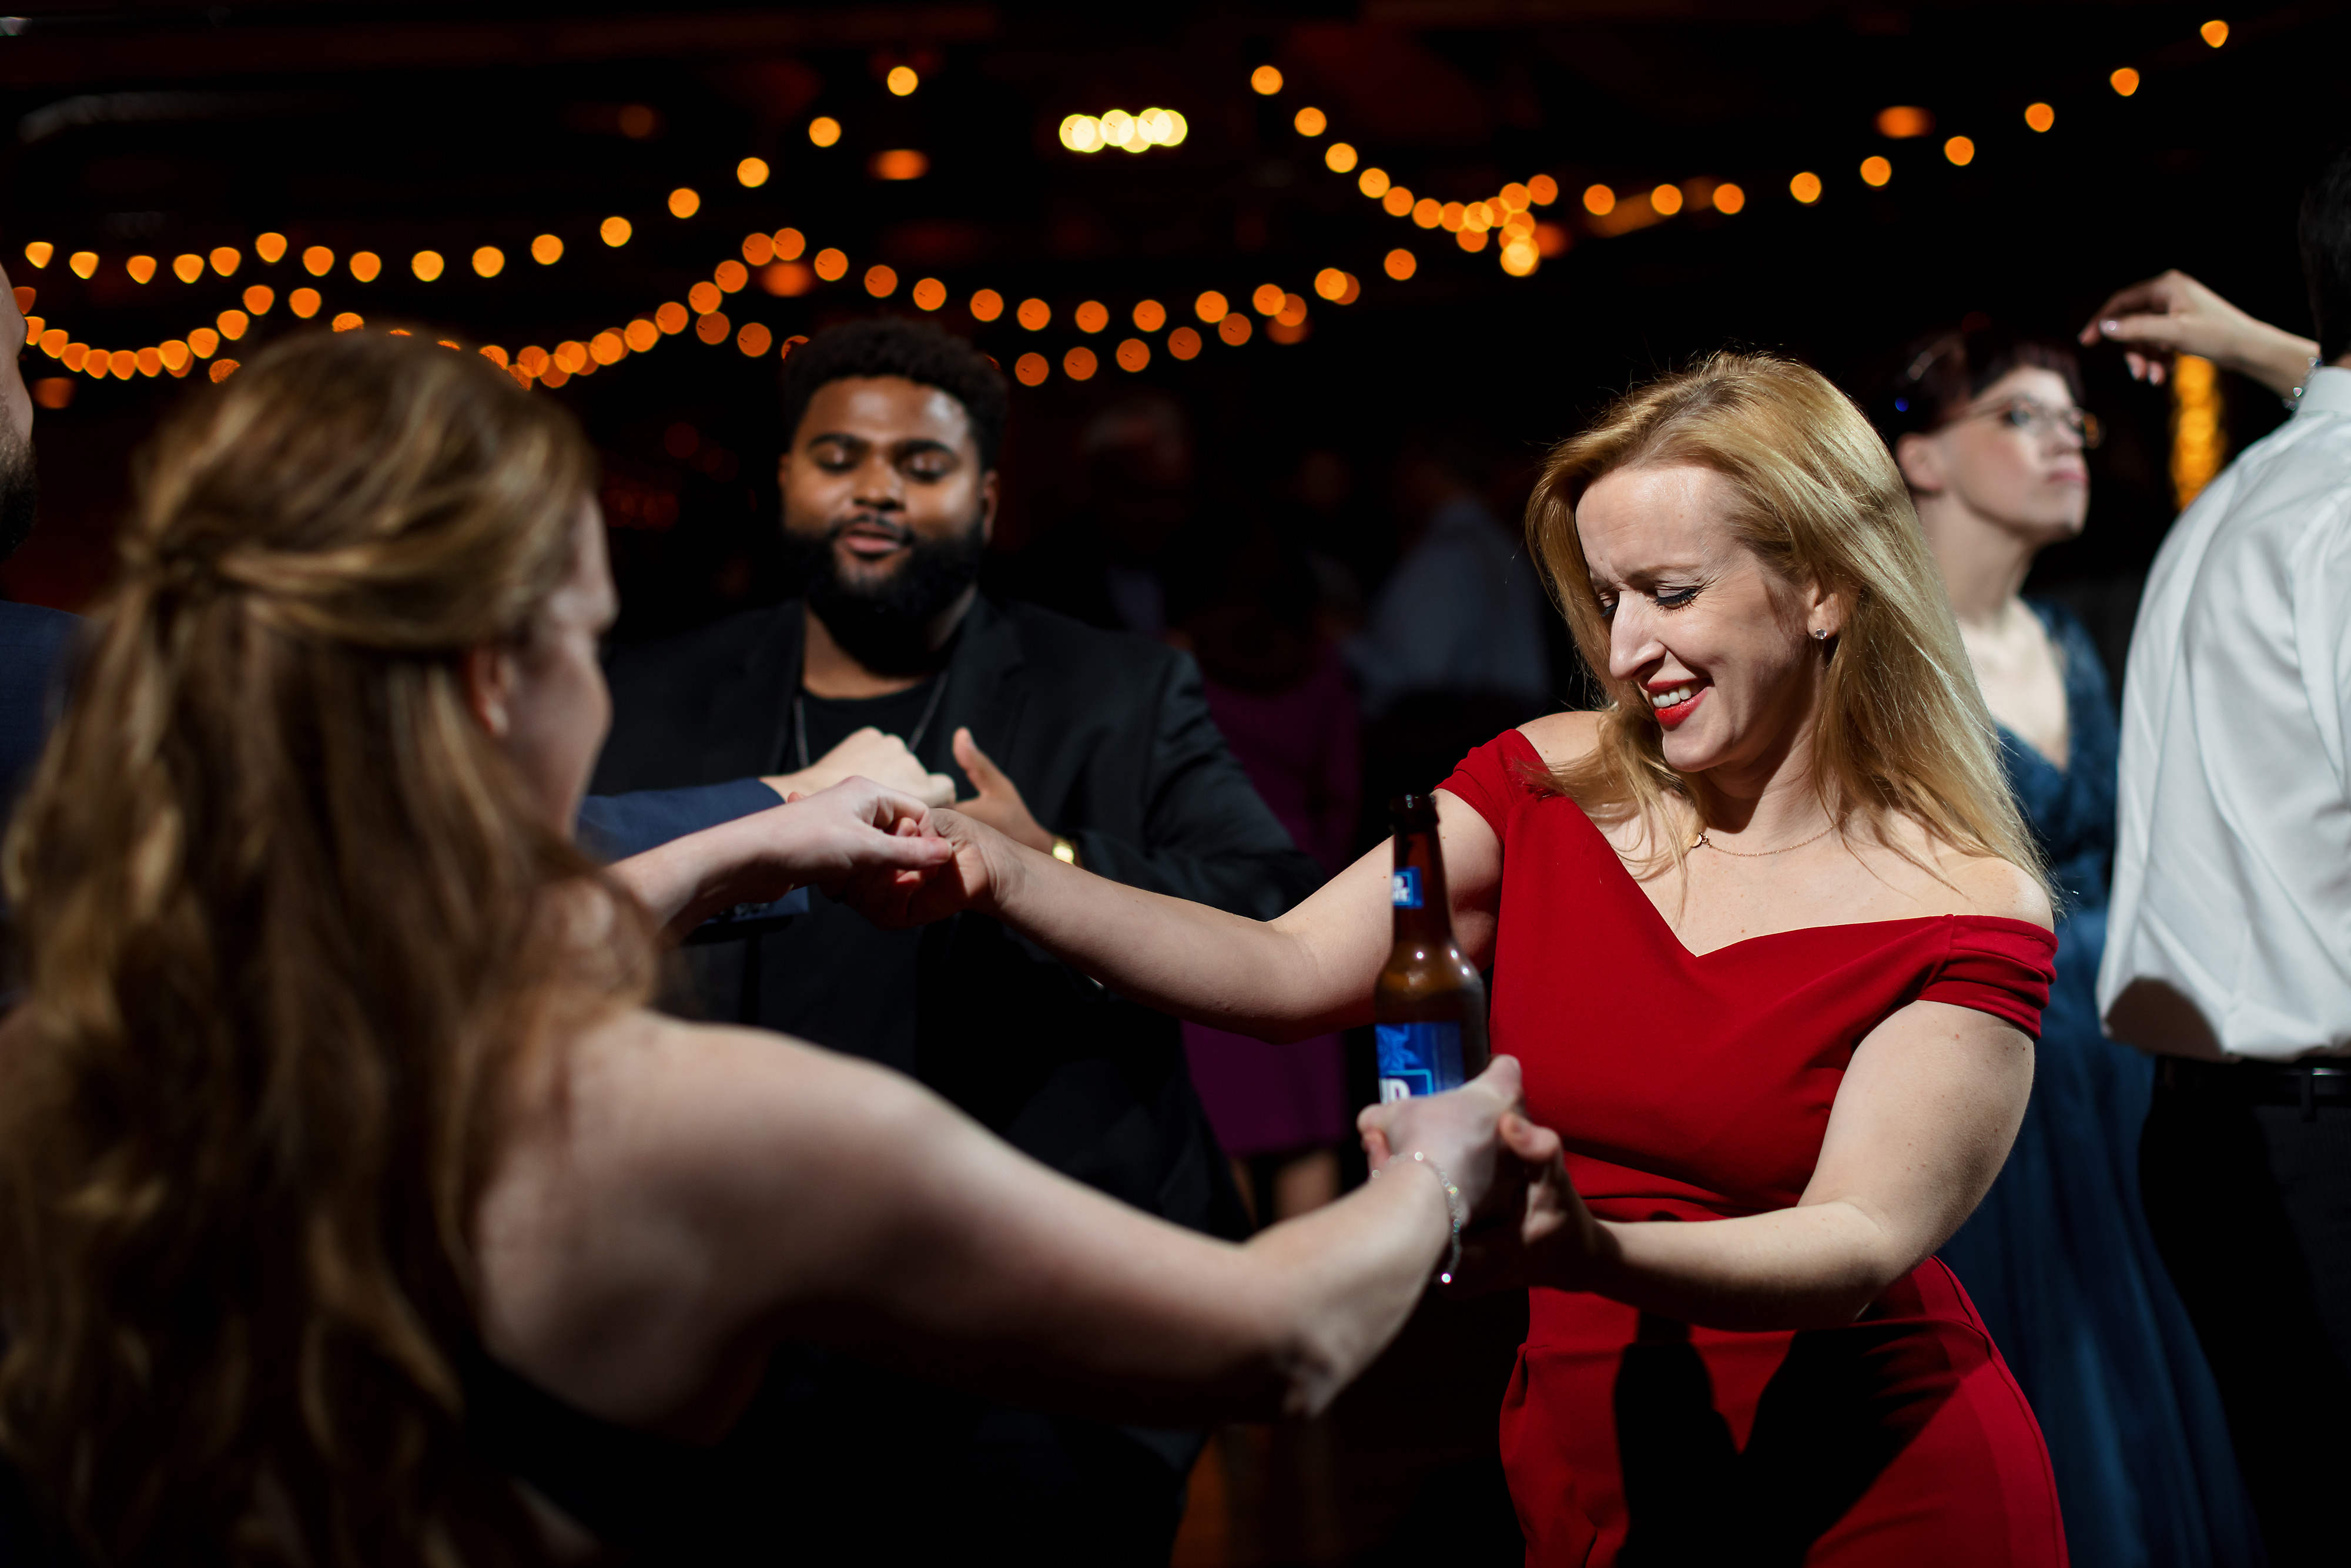 Wedding guests dance during wedding reception at Fishermen's Inn in Elburn Illinois